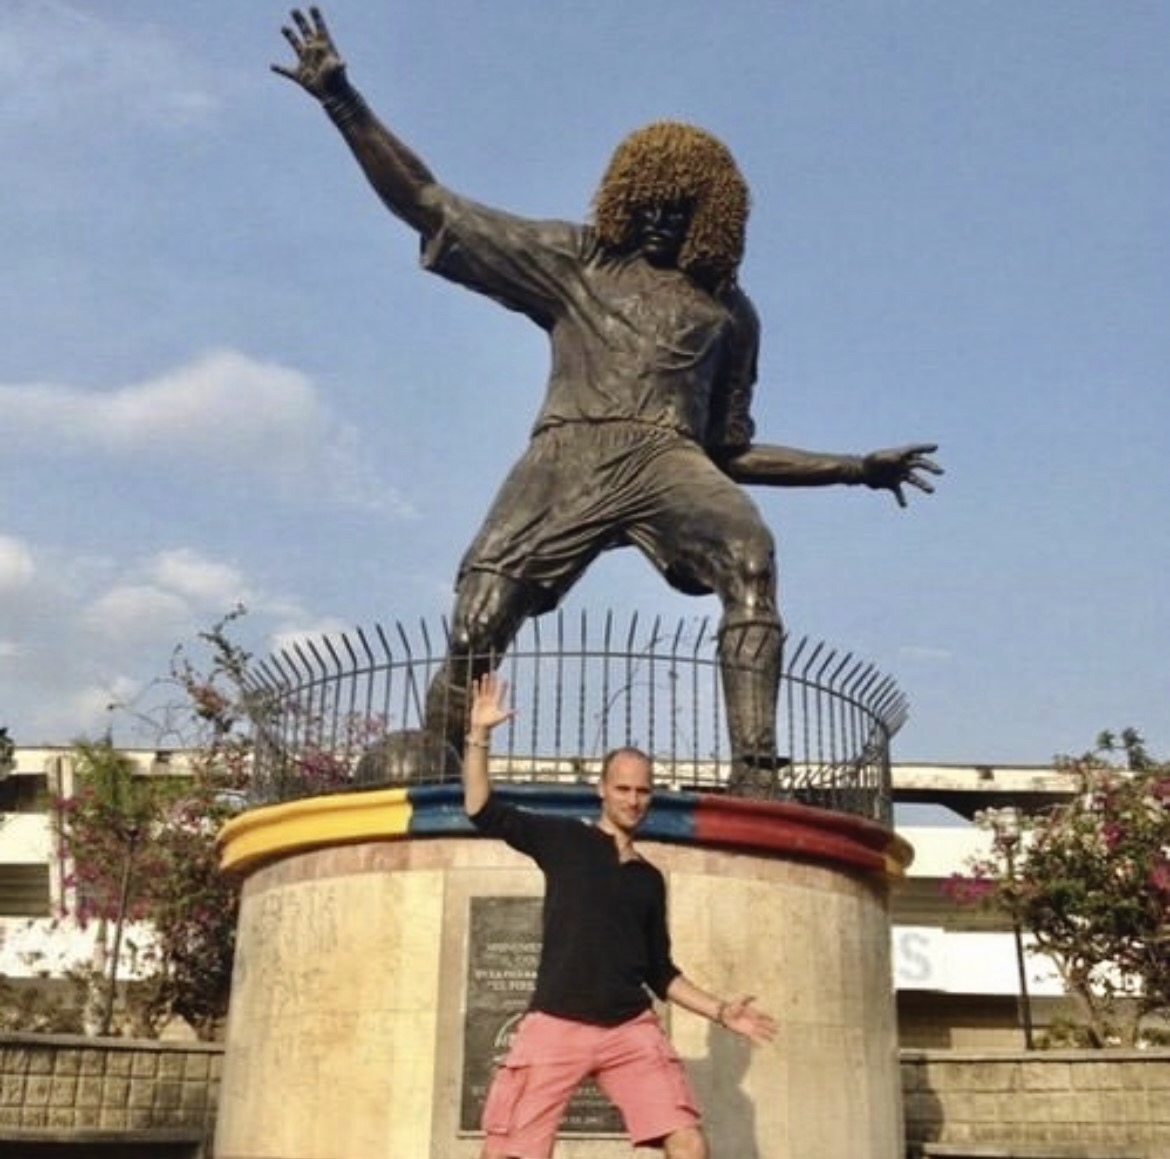 A male tourist recreates the pose of a statue of Carlos Valderrama.